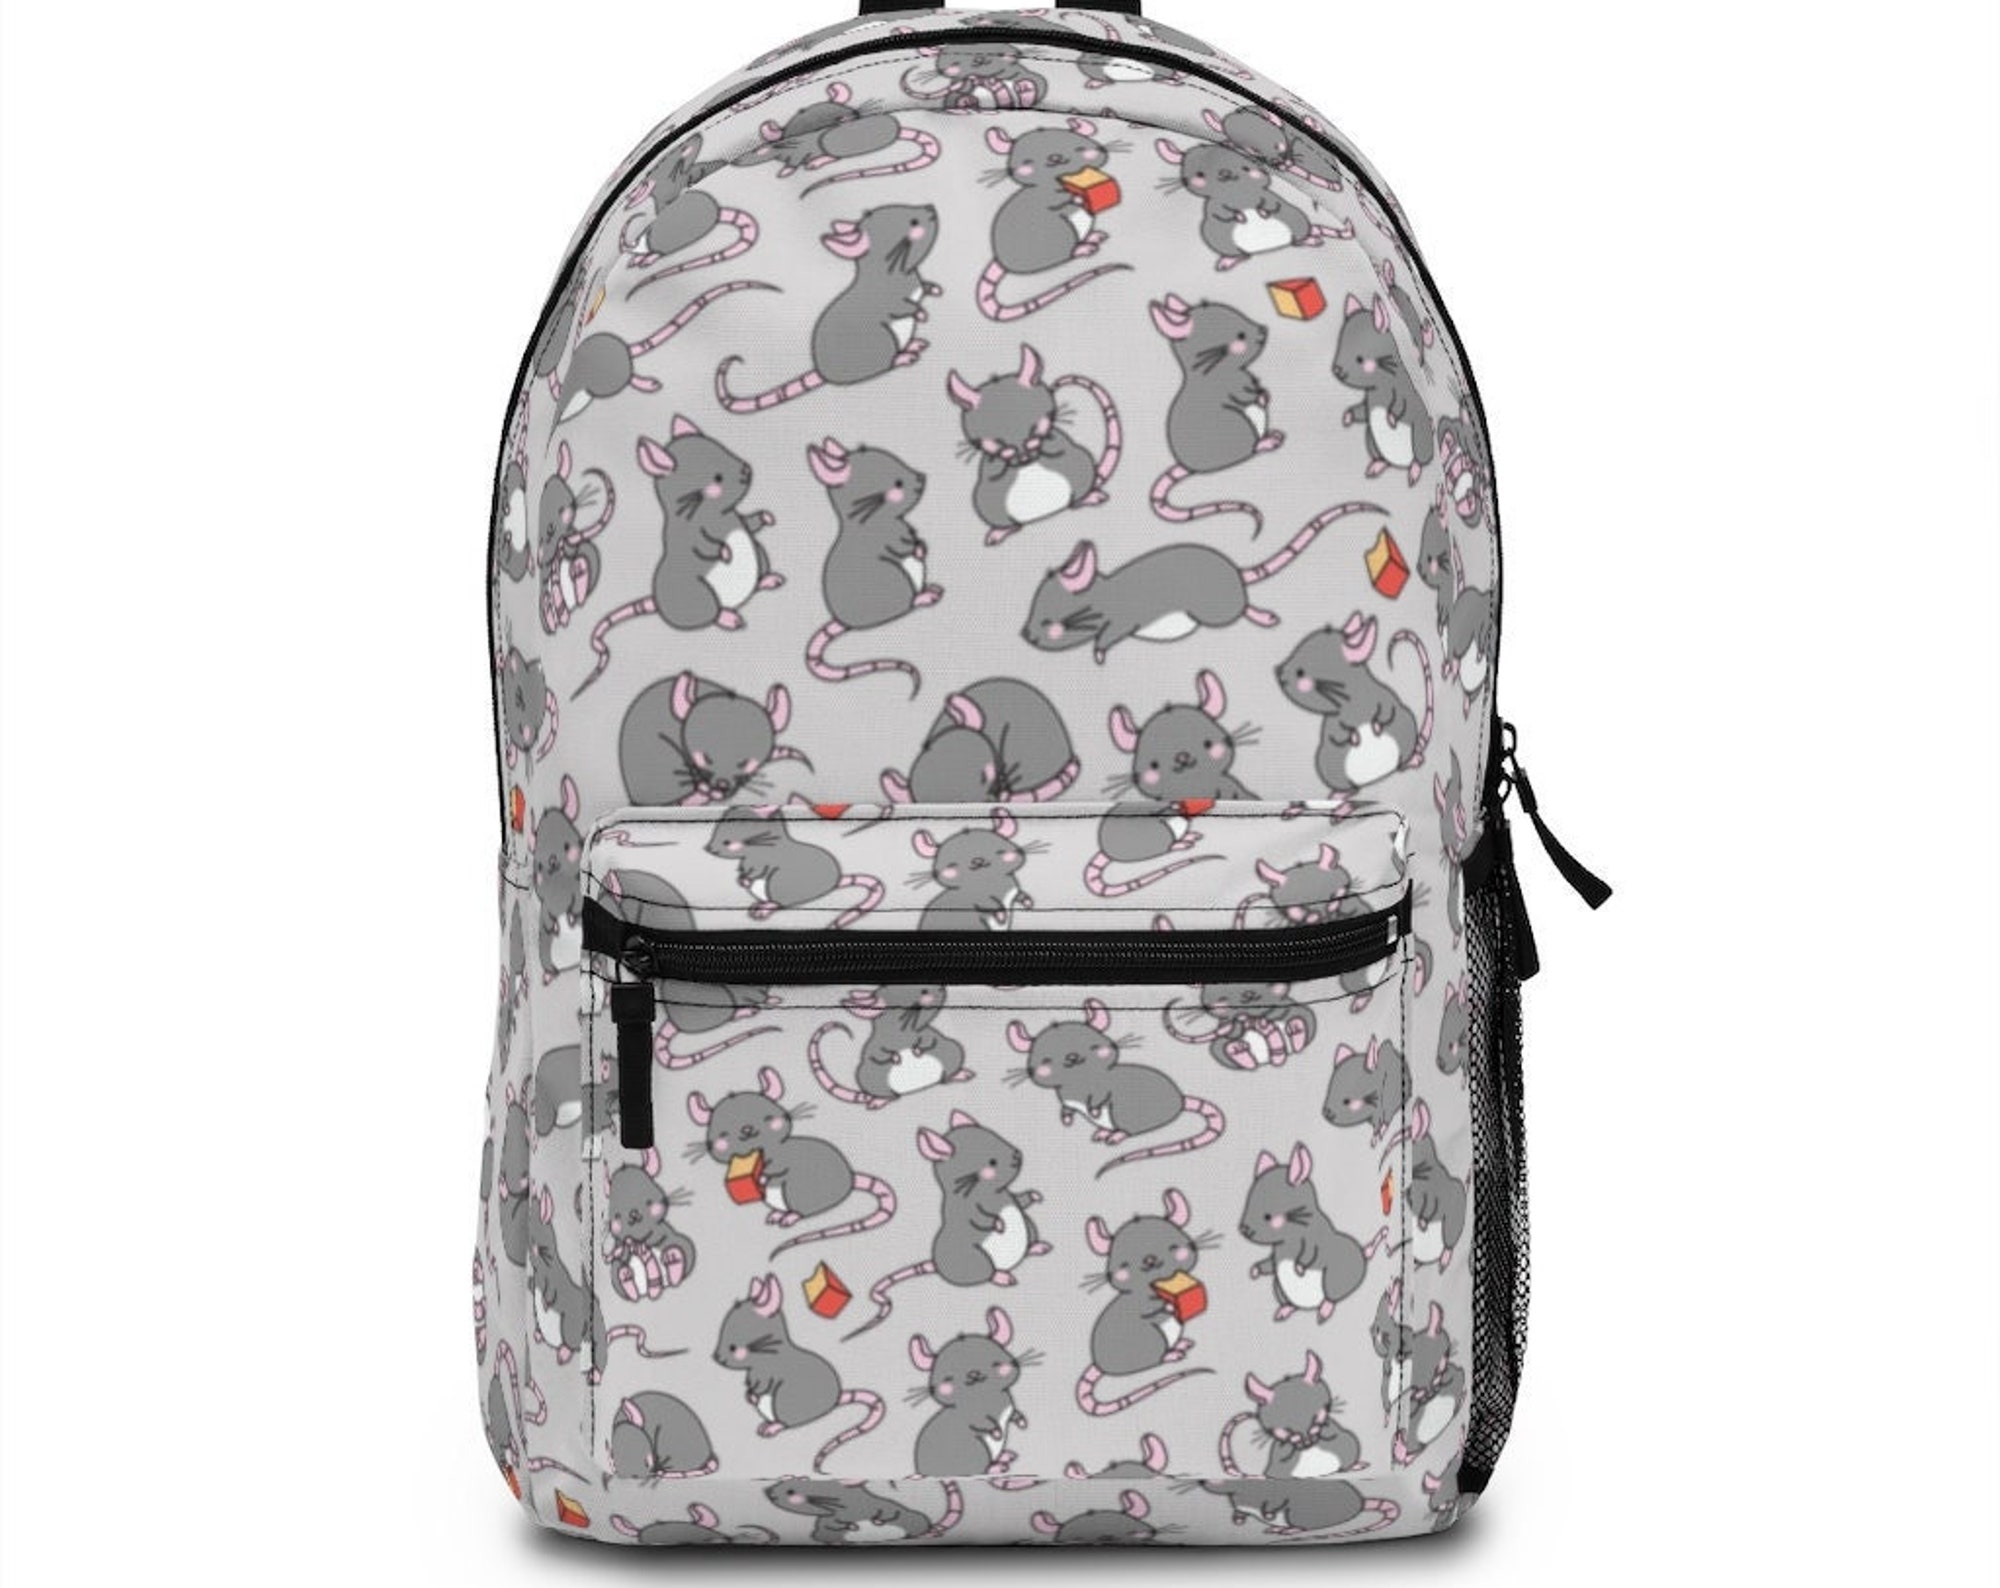 Cute Rats Backpack